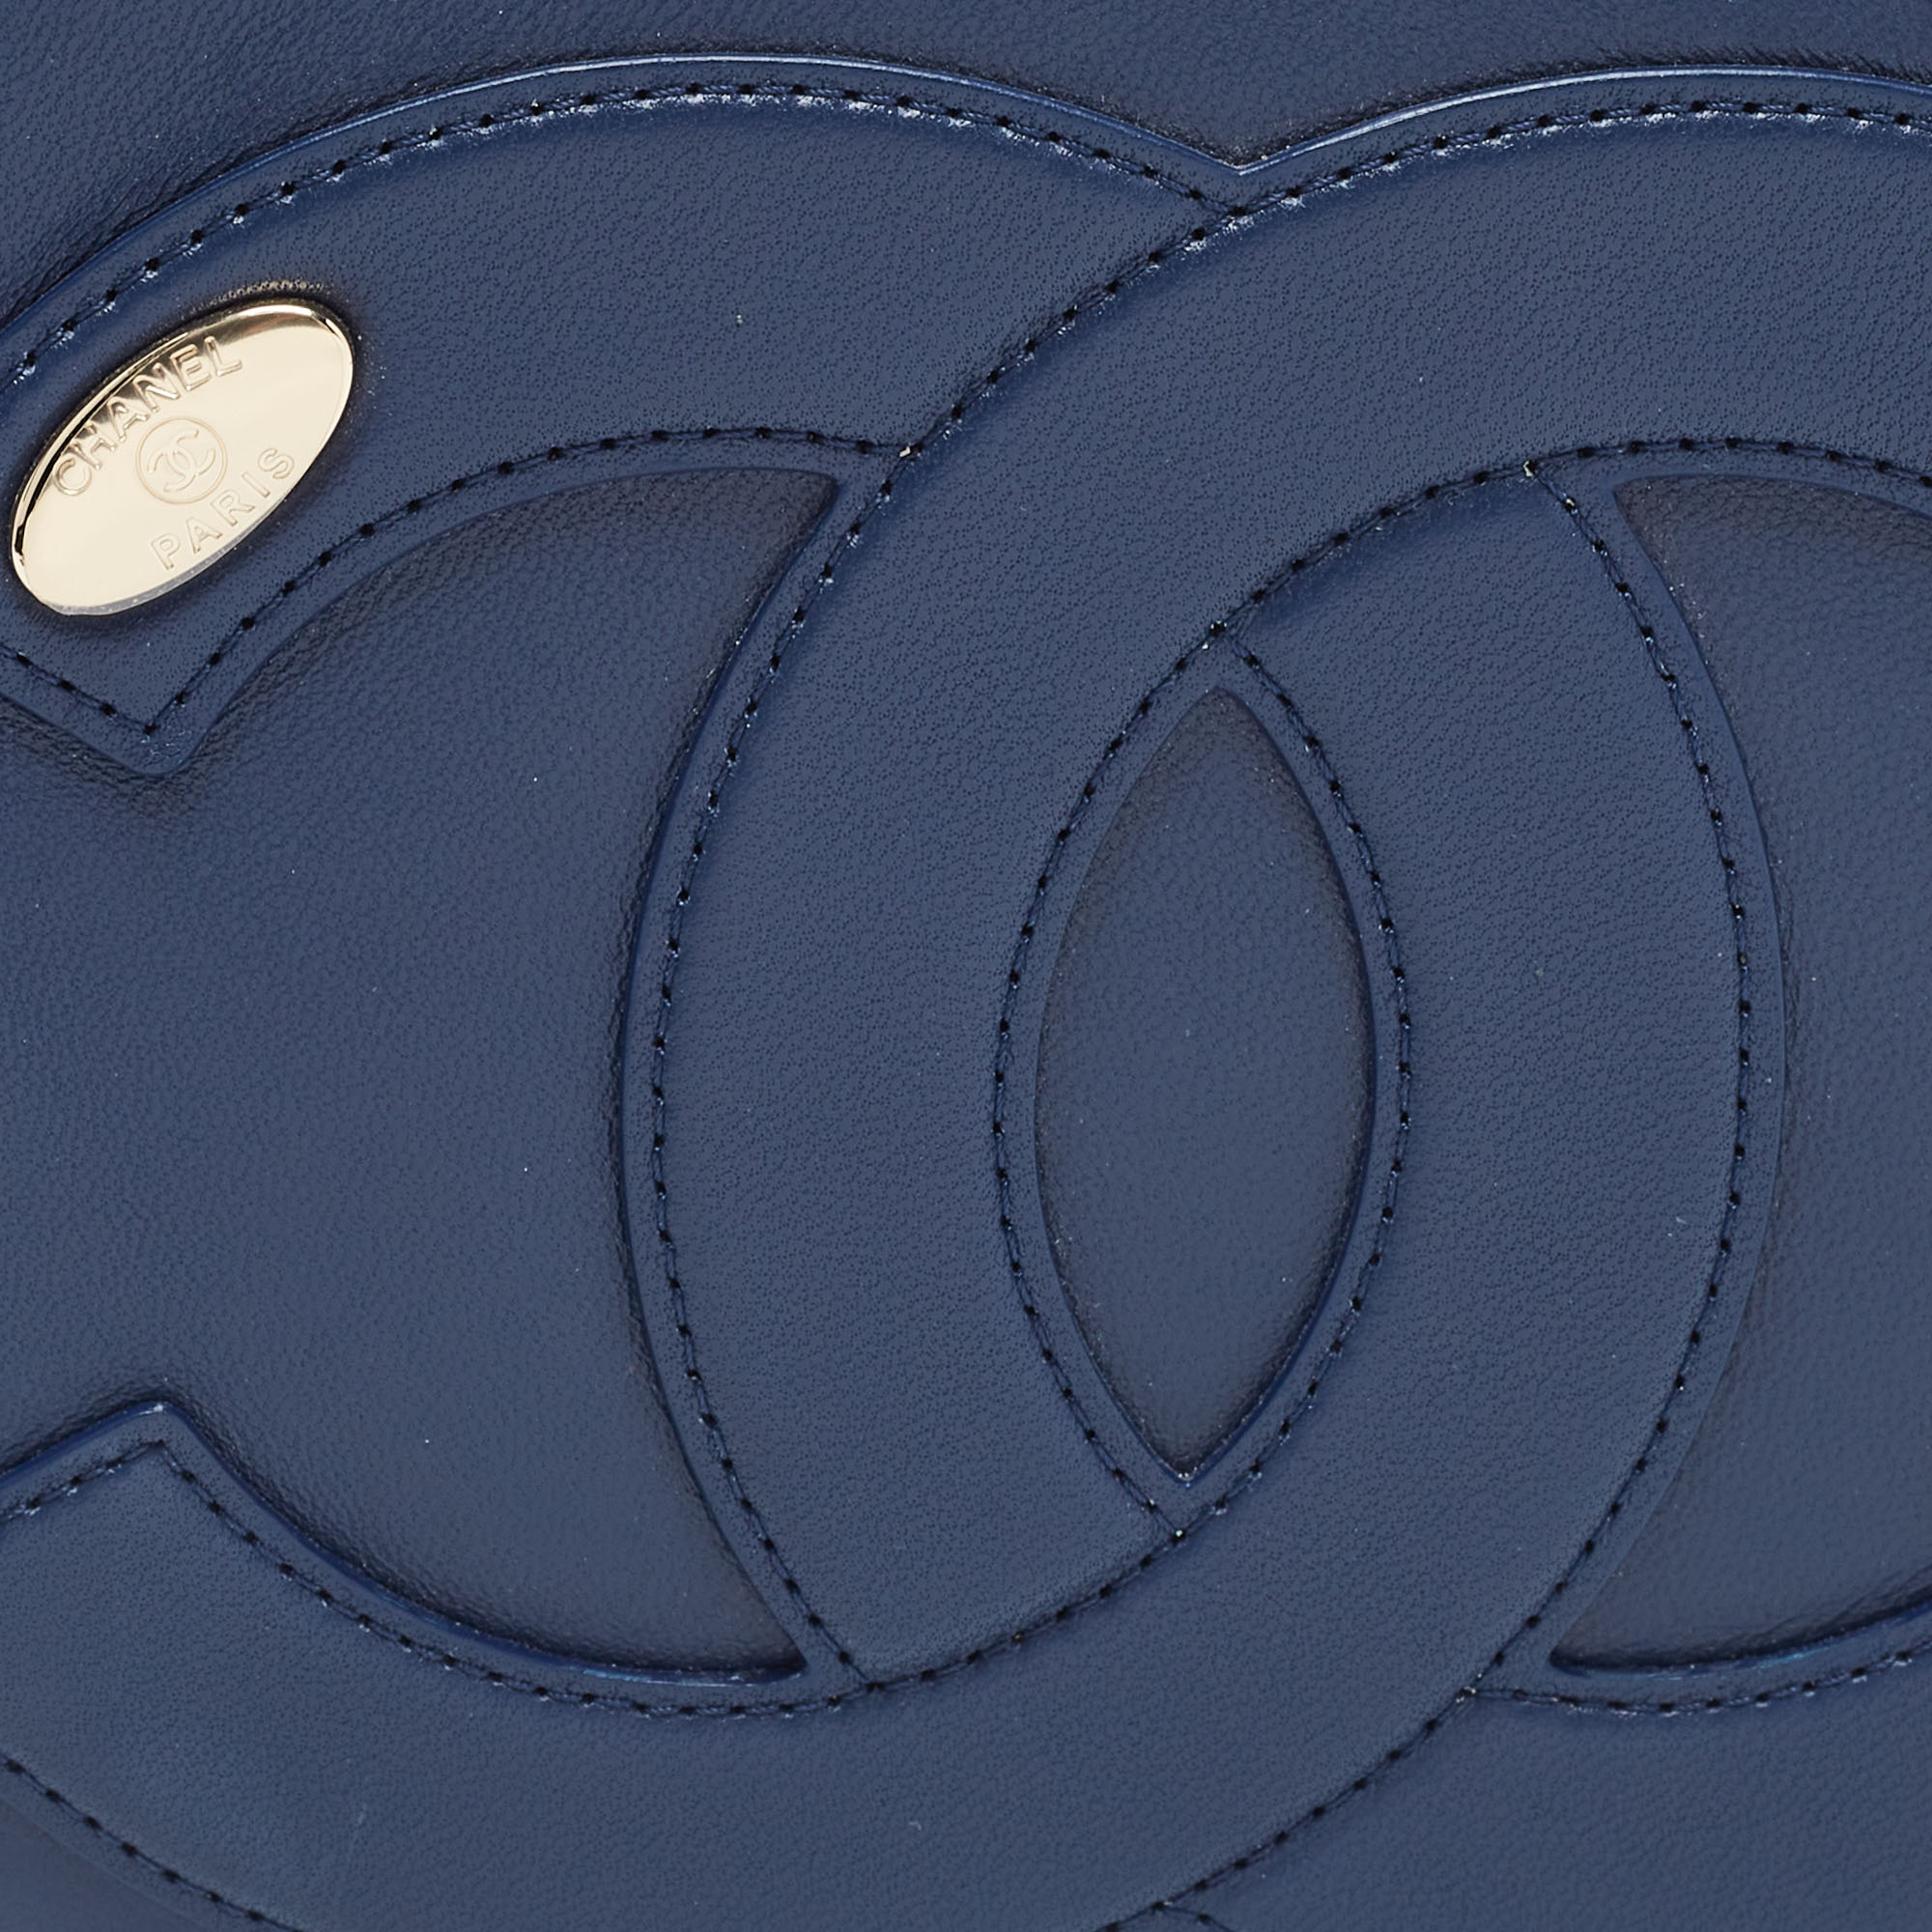 Chanel Blue Leather CC Mania Waist Bag